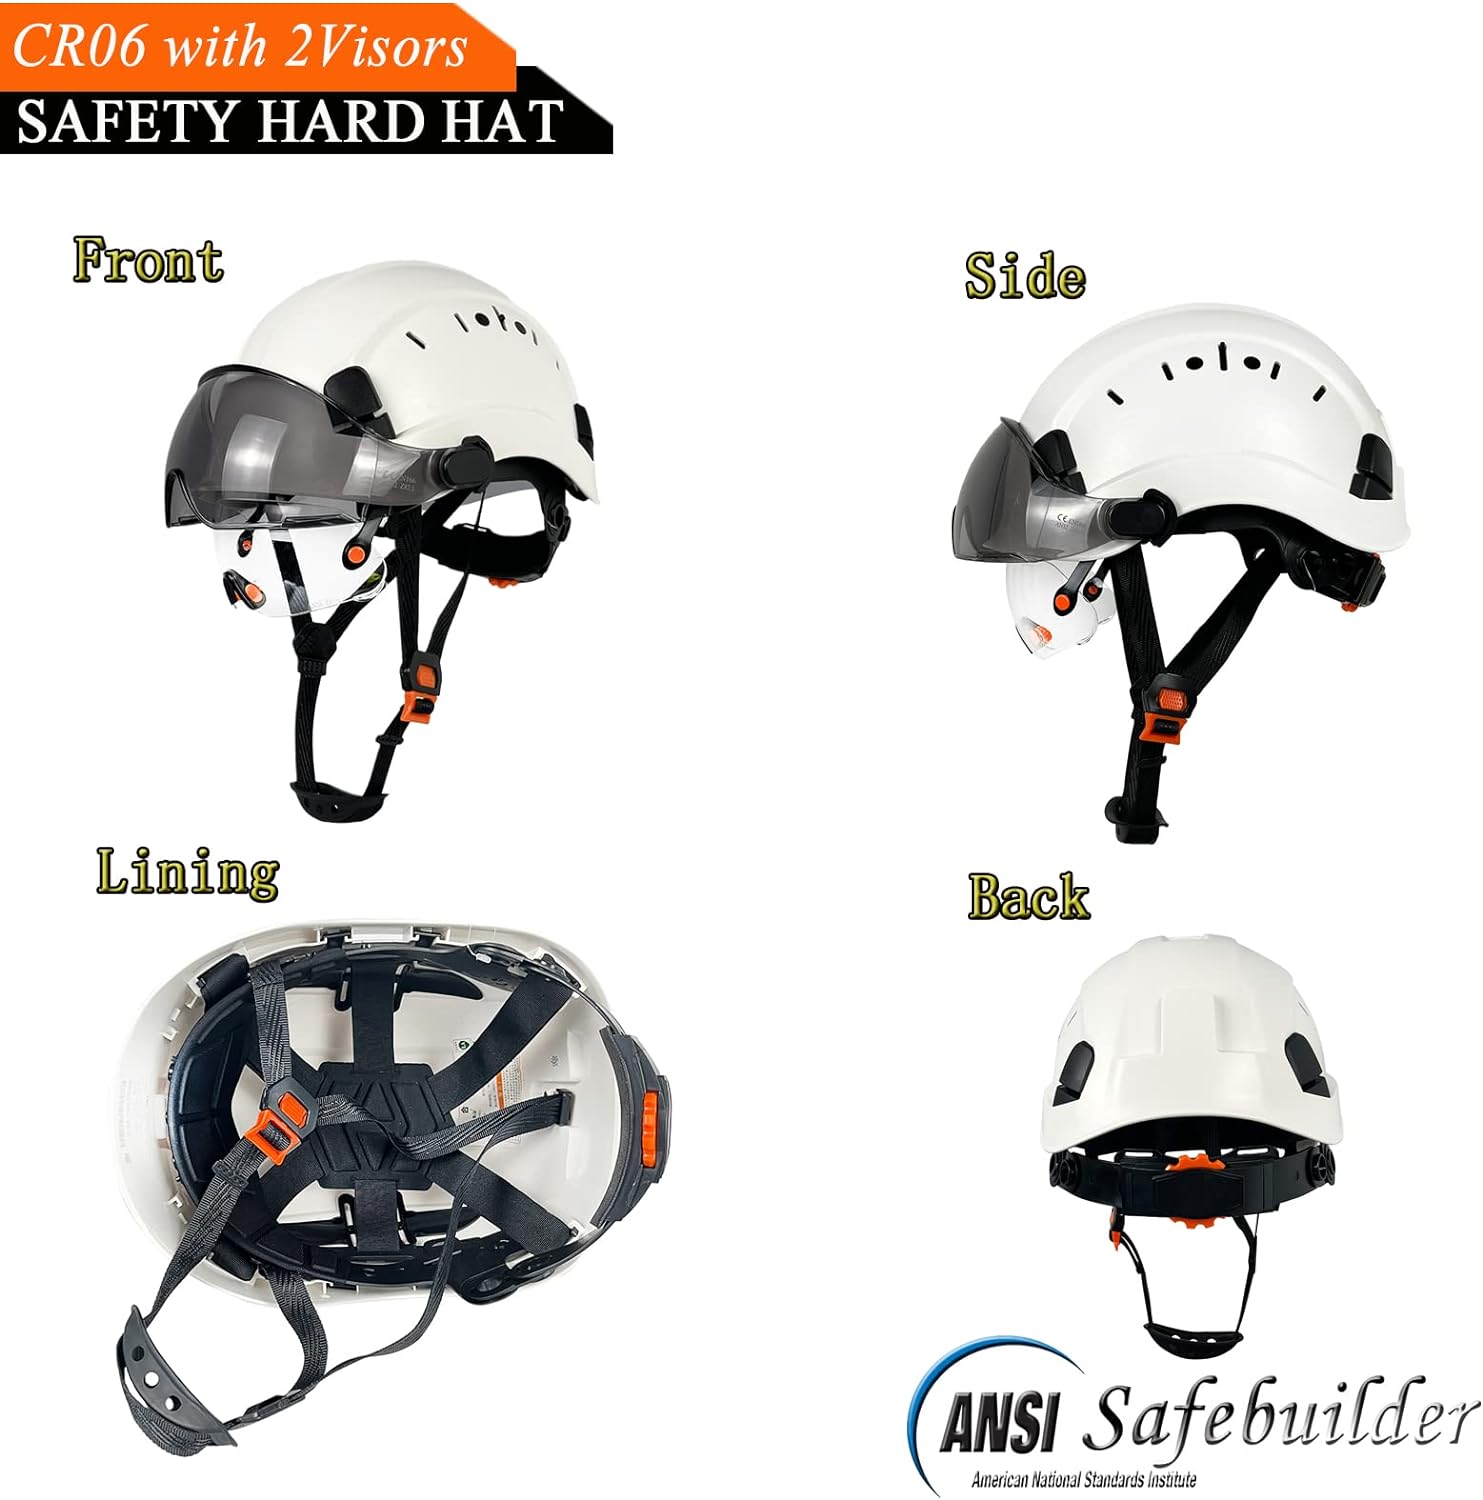 SAFEBUILDER CR06+2V Construction Safety Helmet with Build-in Visor ABS Hard  Hat with Visor Adjustable Ventilation OSHA Approved Hardhats Work Head  Protection Certified ANSI/ISEA Z89.1 - JR SAFETY BOOTS